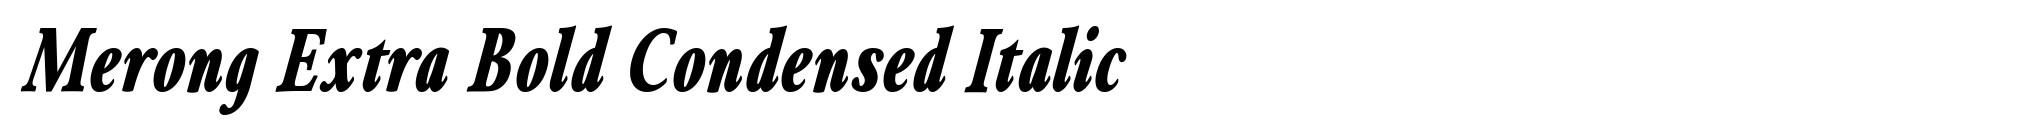 Merong Extra Bold Condensed Italic image